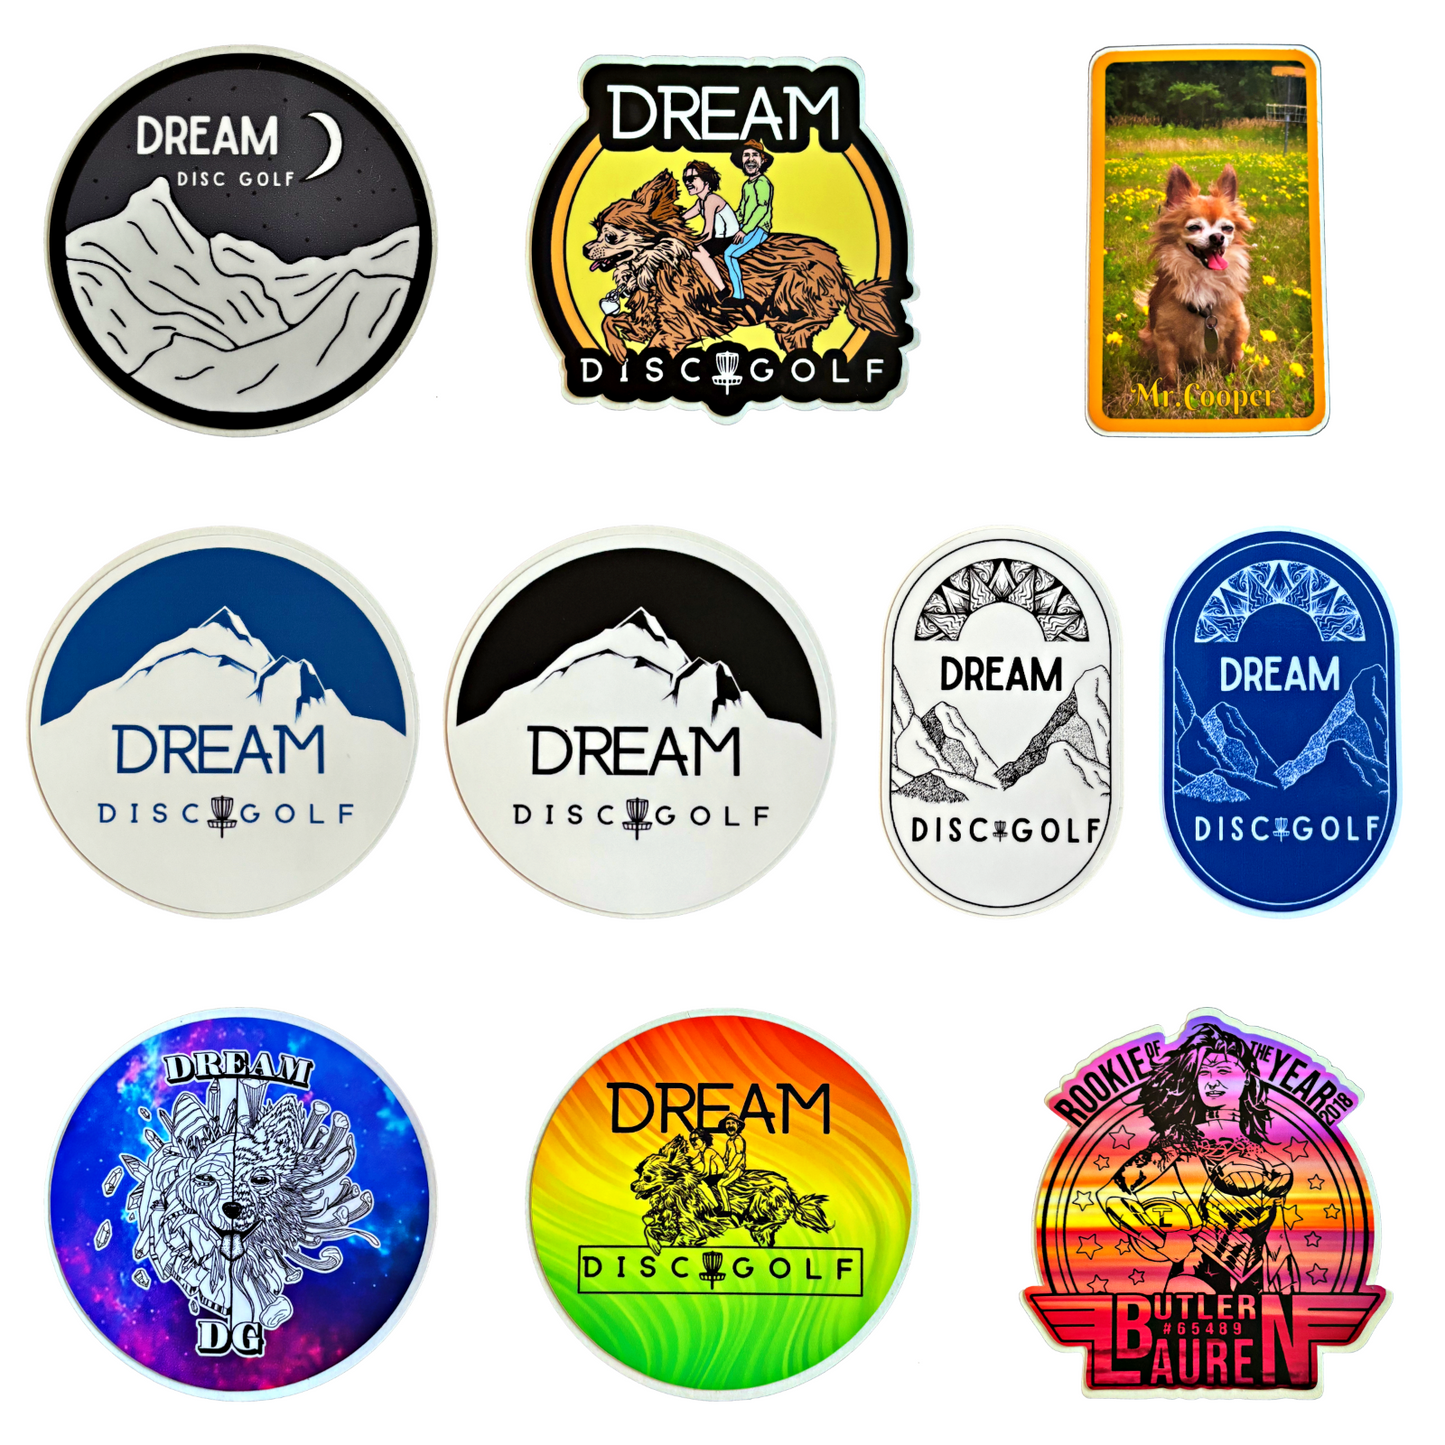 Dream DG Sticker Pack